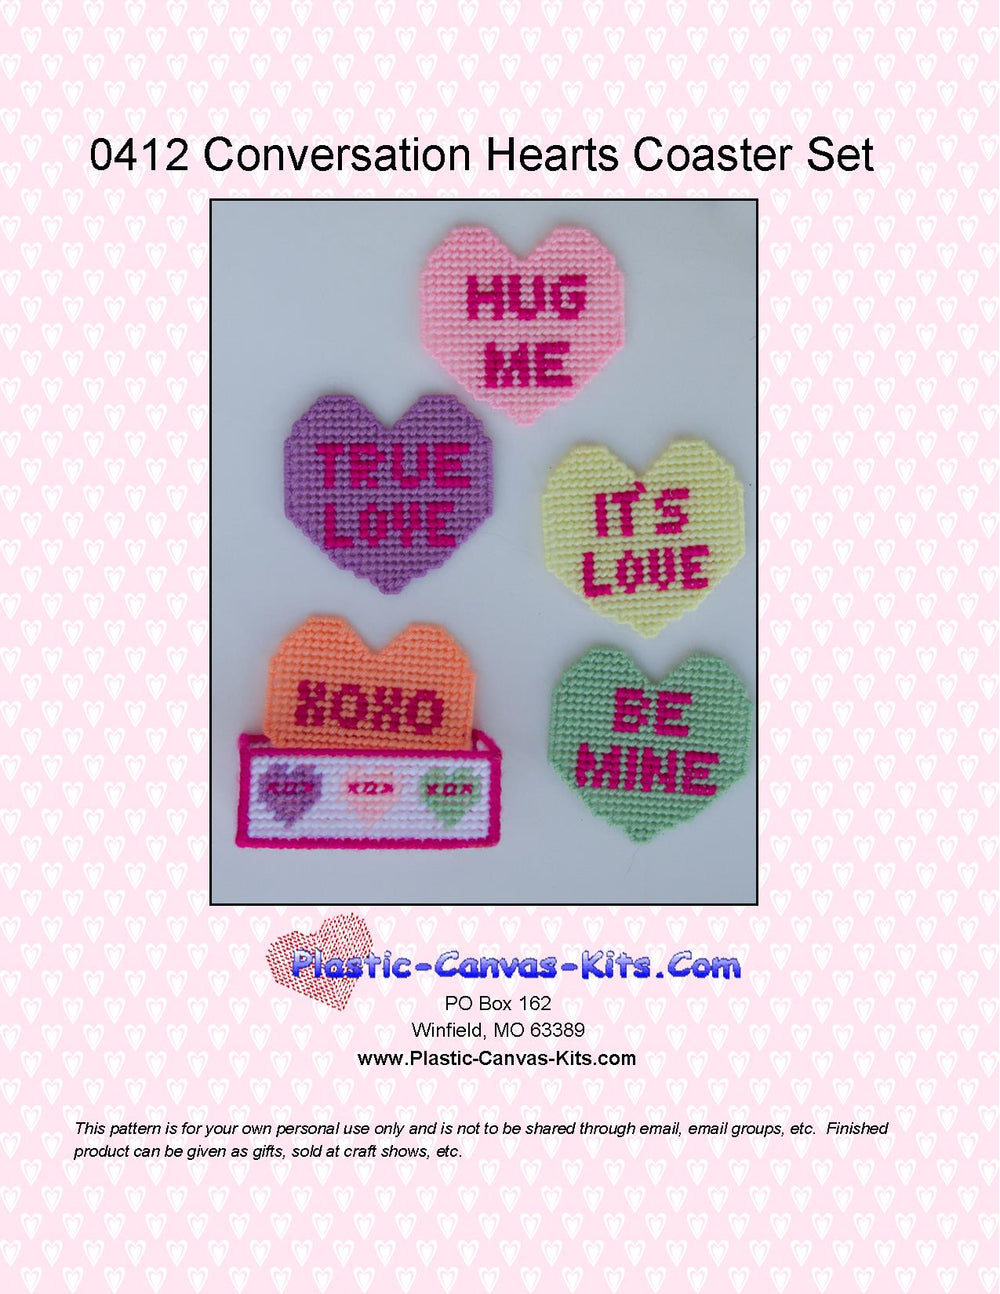 Conversation Hearts Coaster Set